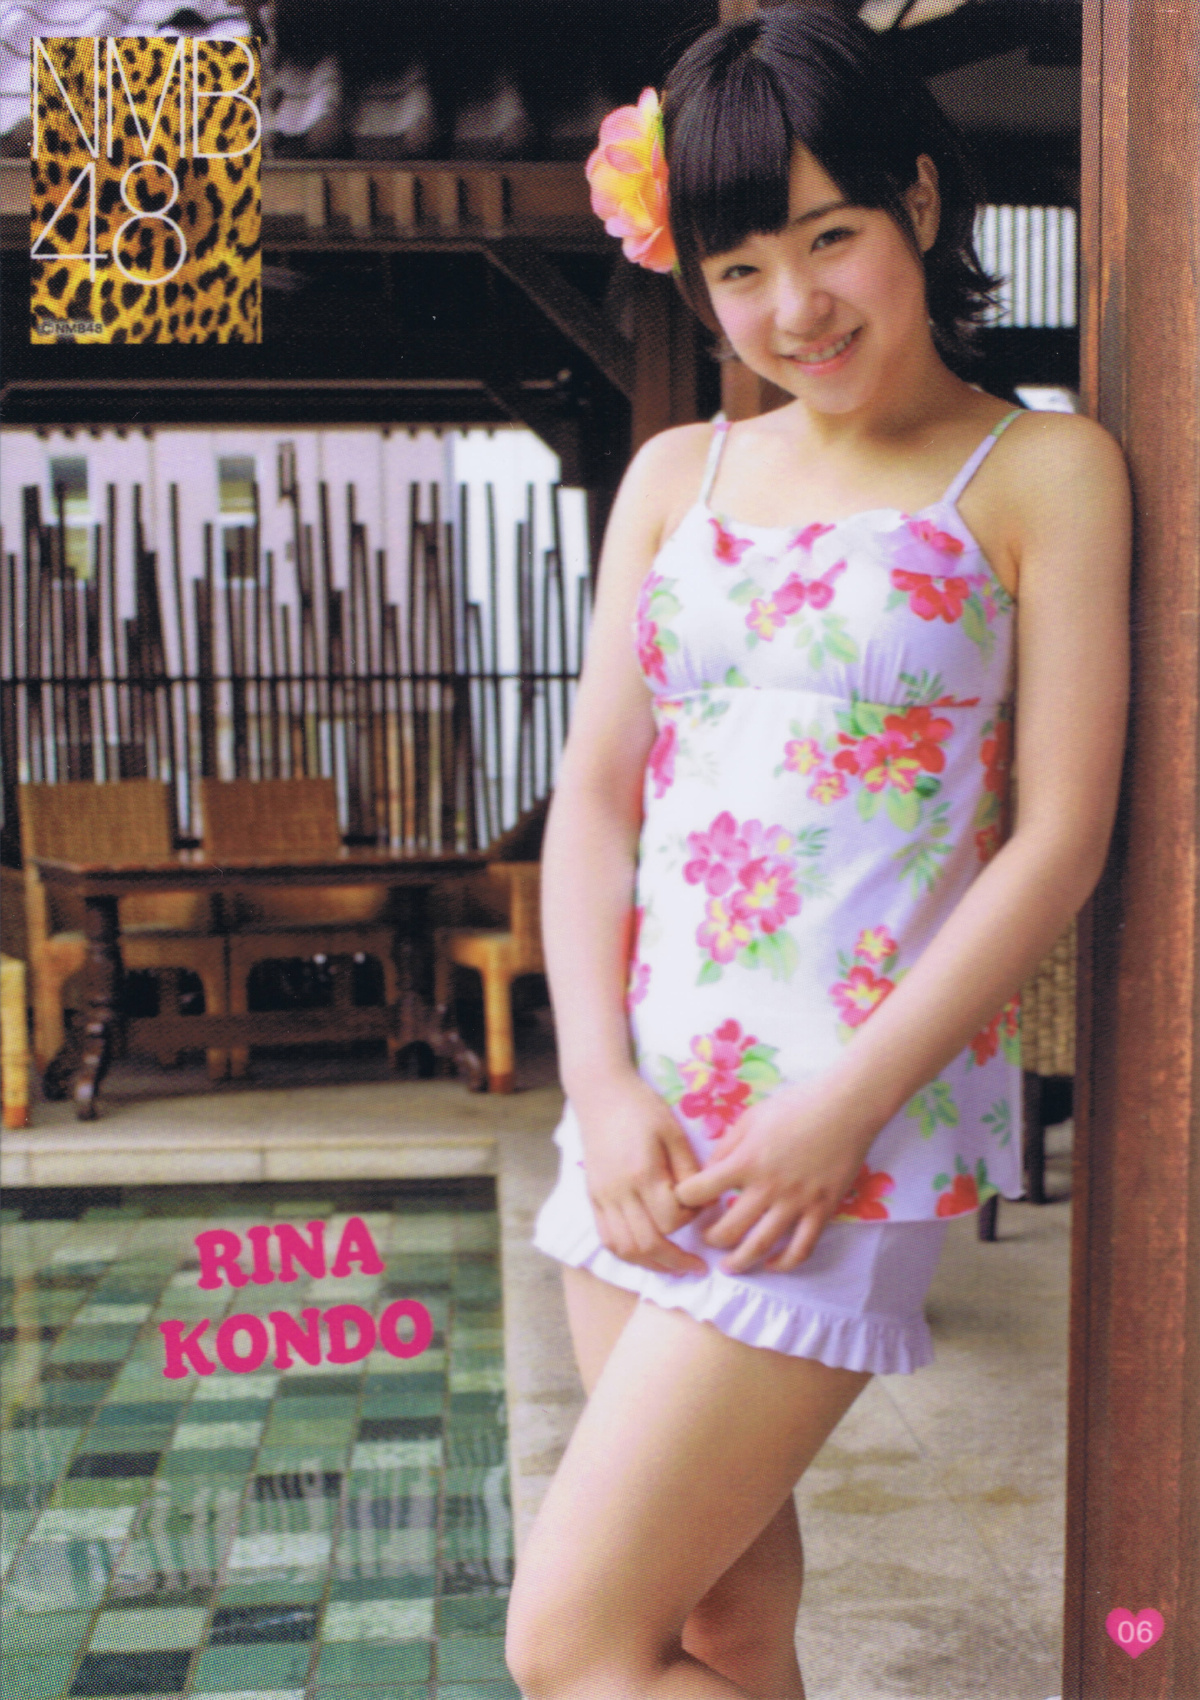 Accessory Trading Card 06 A Kondou Rina